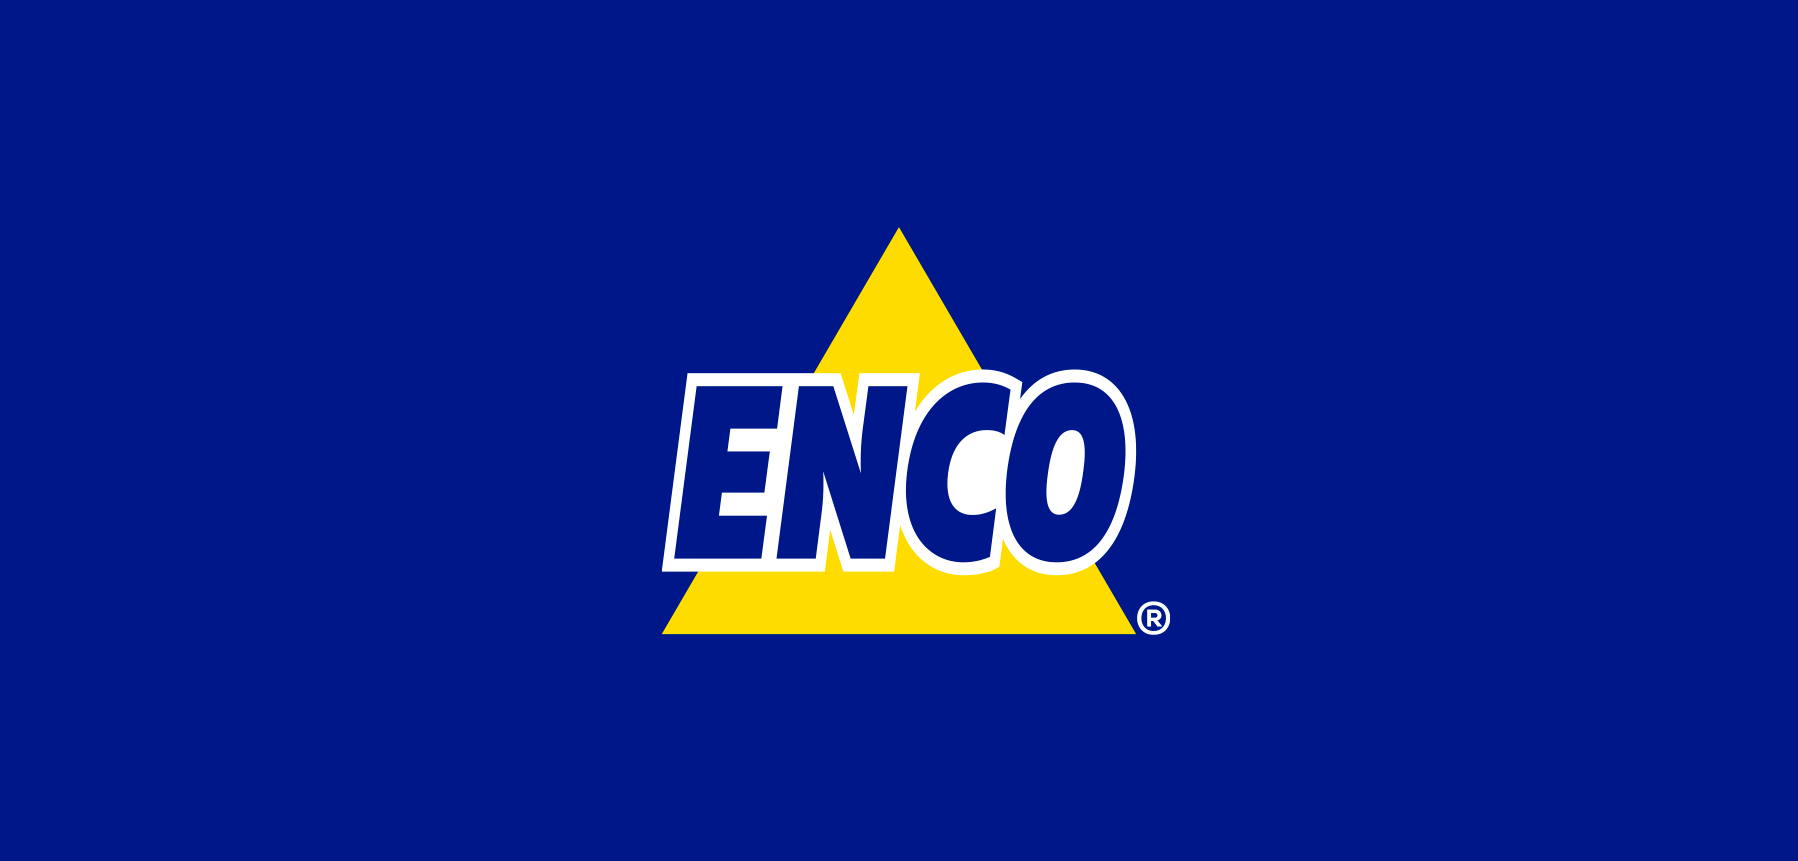 ENCO new image